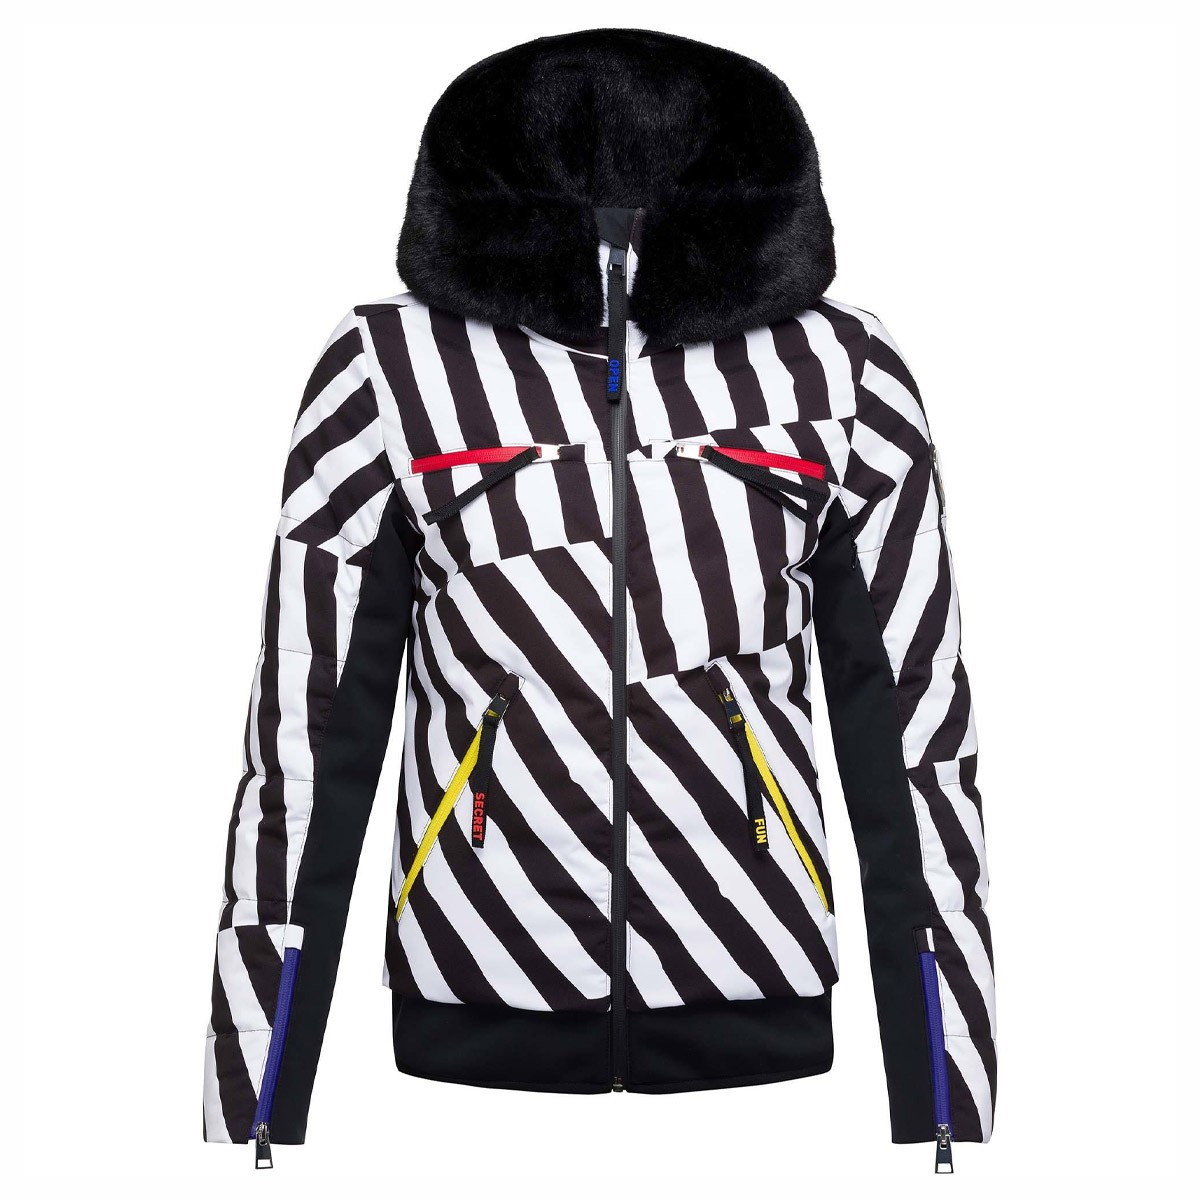 Jc De Castelbajac ski jacket for Rossignol Furi Pr woman | EN